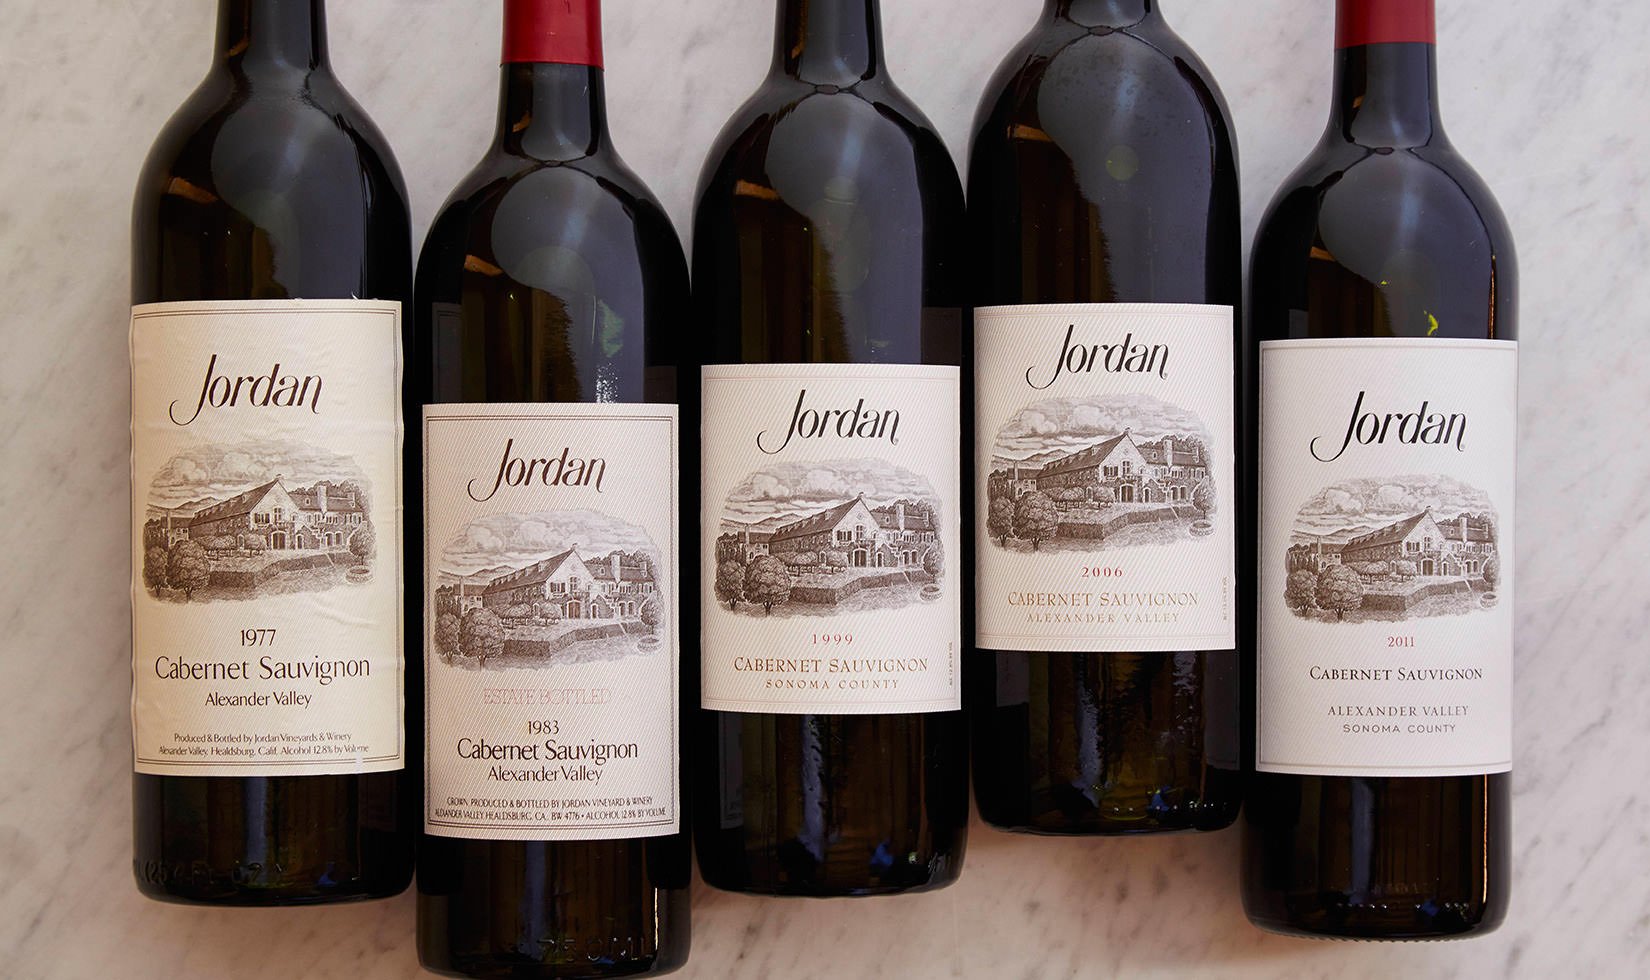 Jordan cabernet sauvignon wine bottles in a row